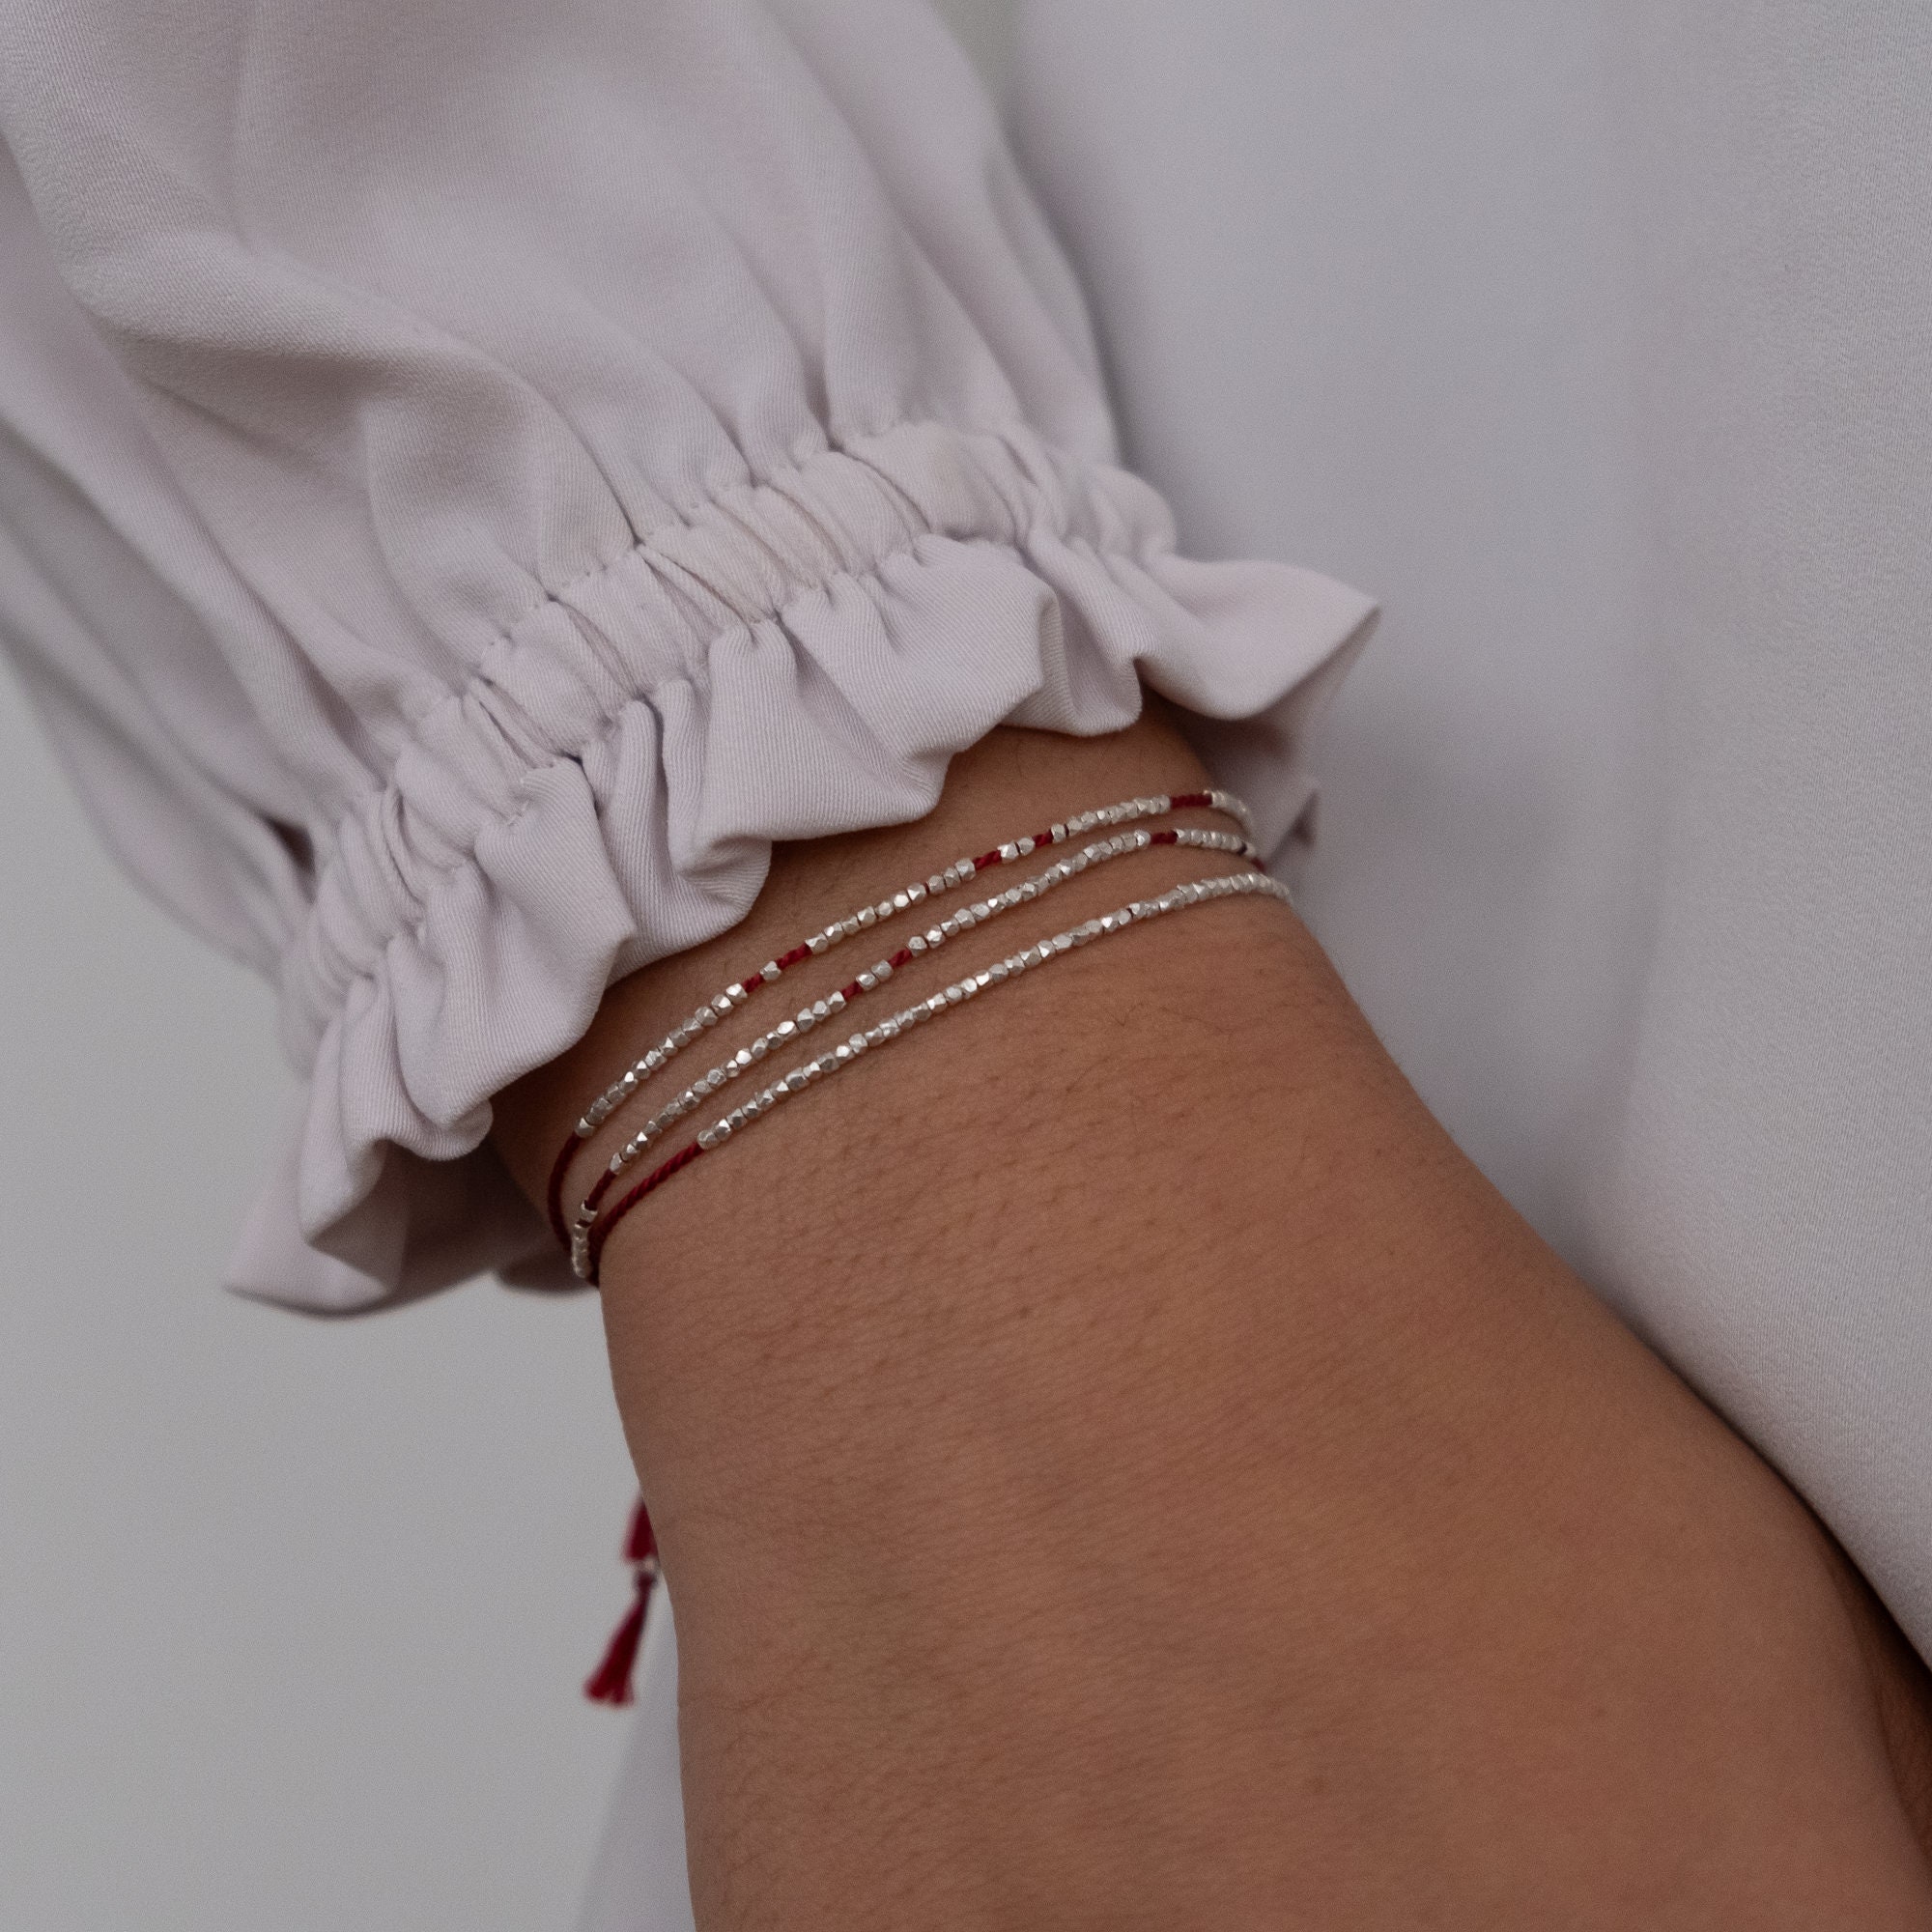 Buy Delicate Silk Bracelet, Minimalistic Bracelet, Dainty Wish Bracelet, Friendship  Bracelet, Beaded Bracelet, Cord Bracelet, Gift for Her Online in India 